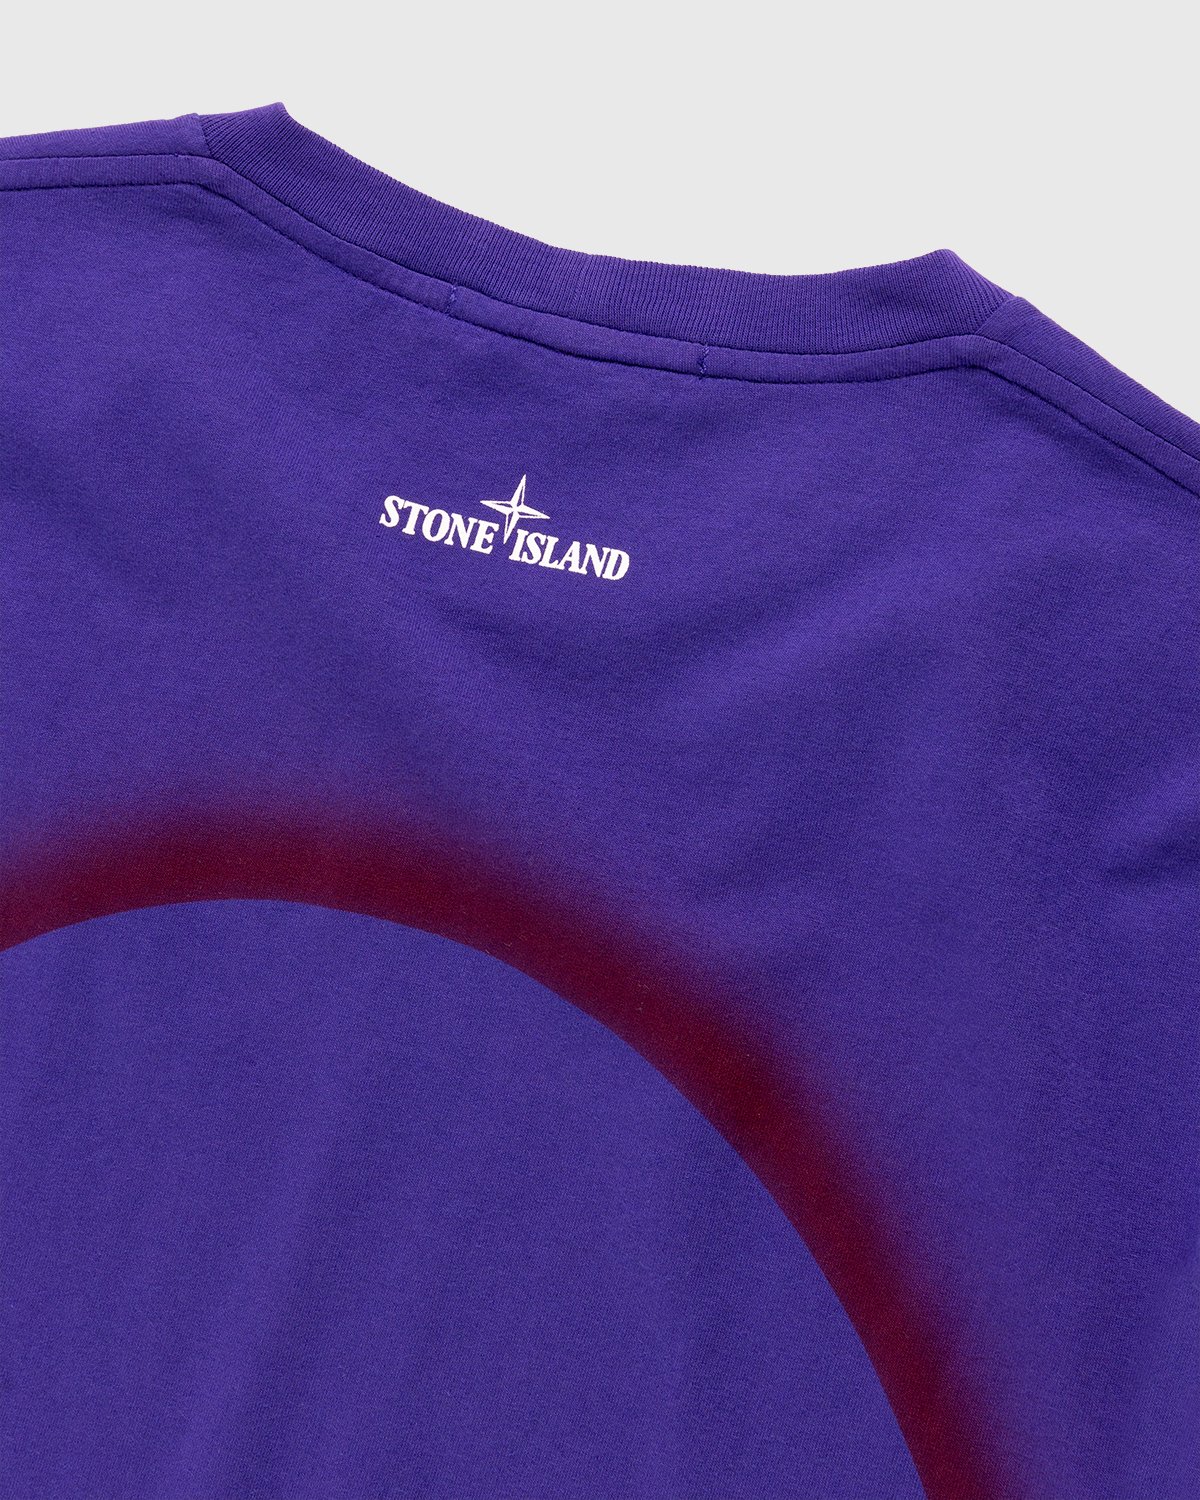 Stone Island - 2NS95 Garment-Dyed Solar Eclipse One T-Shirt Bright Blue - Clothing - Blue - Image 3